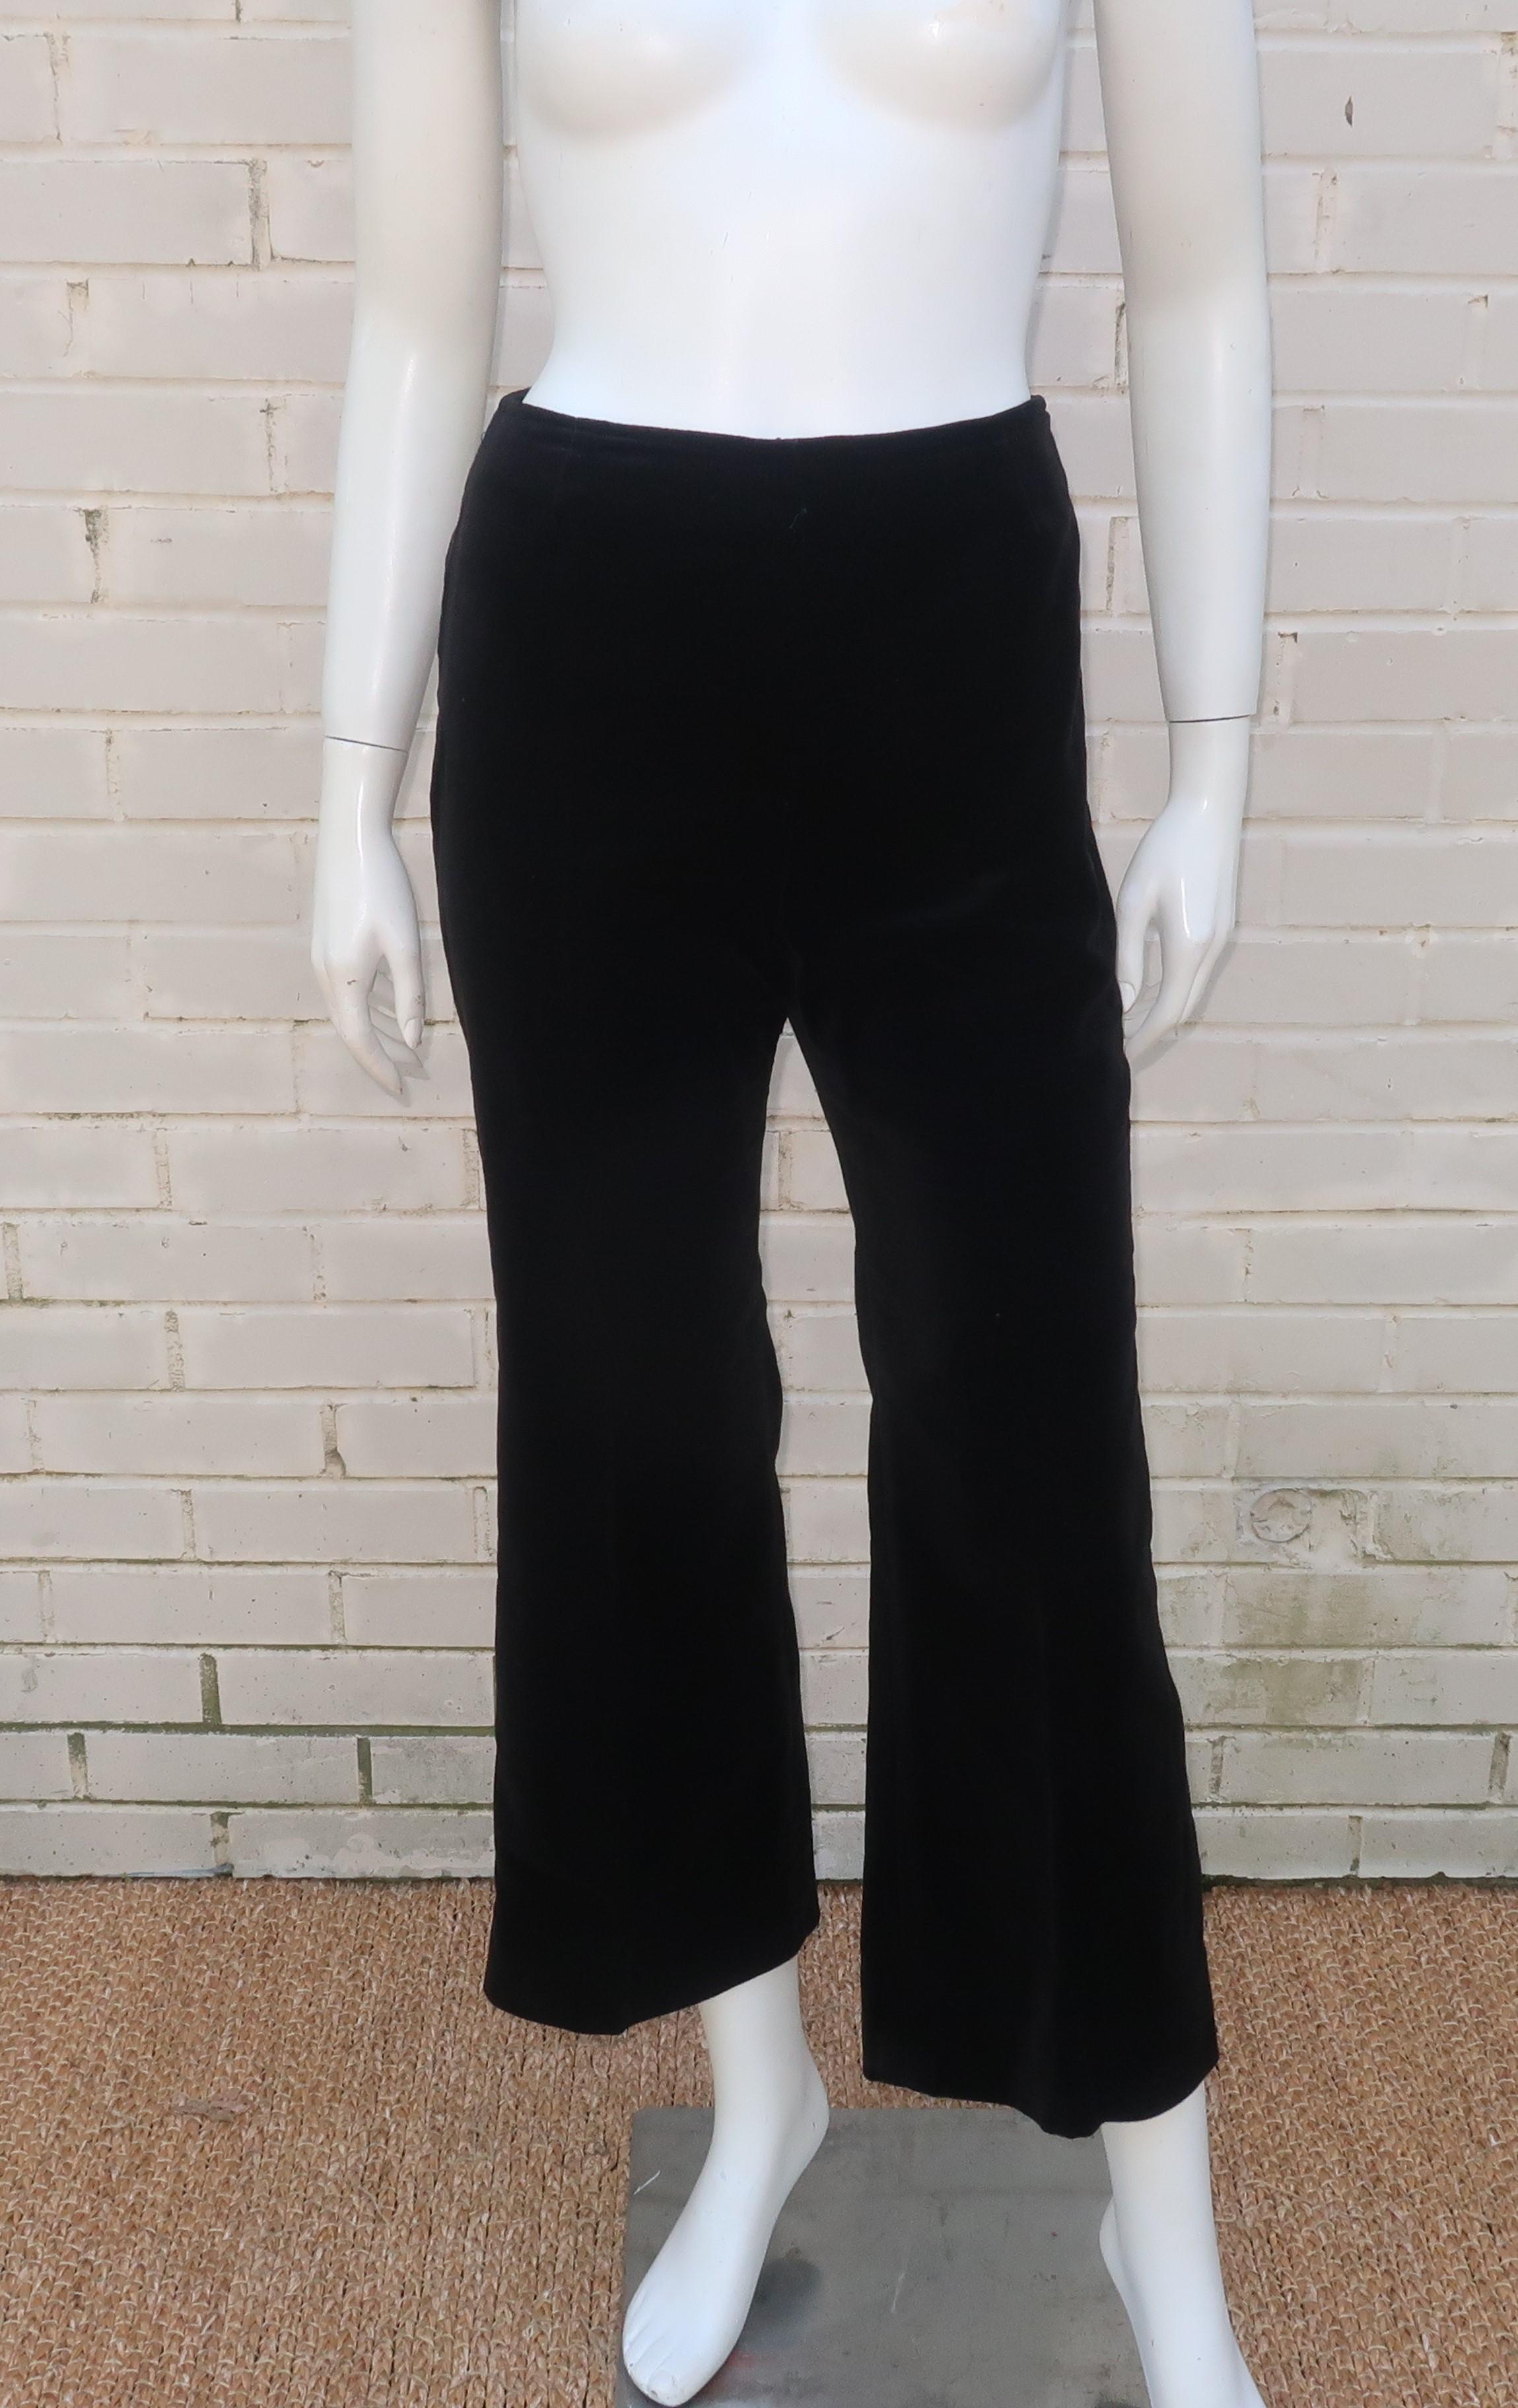 Black Velvet Pant Suit With Rhinestone Belt, C.1970 For Sale 6